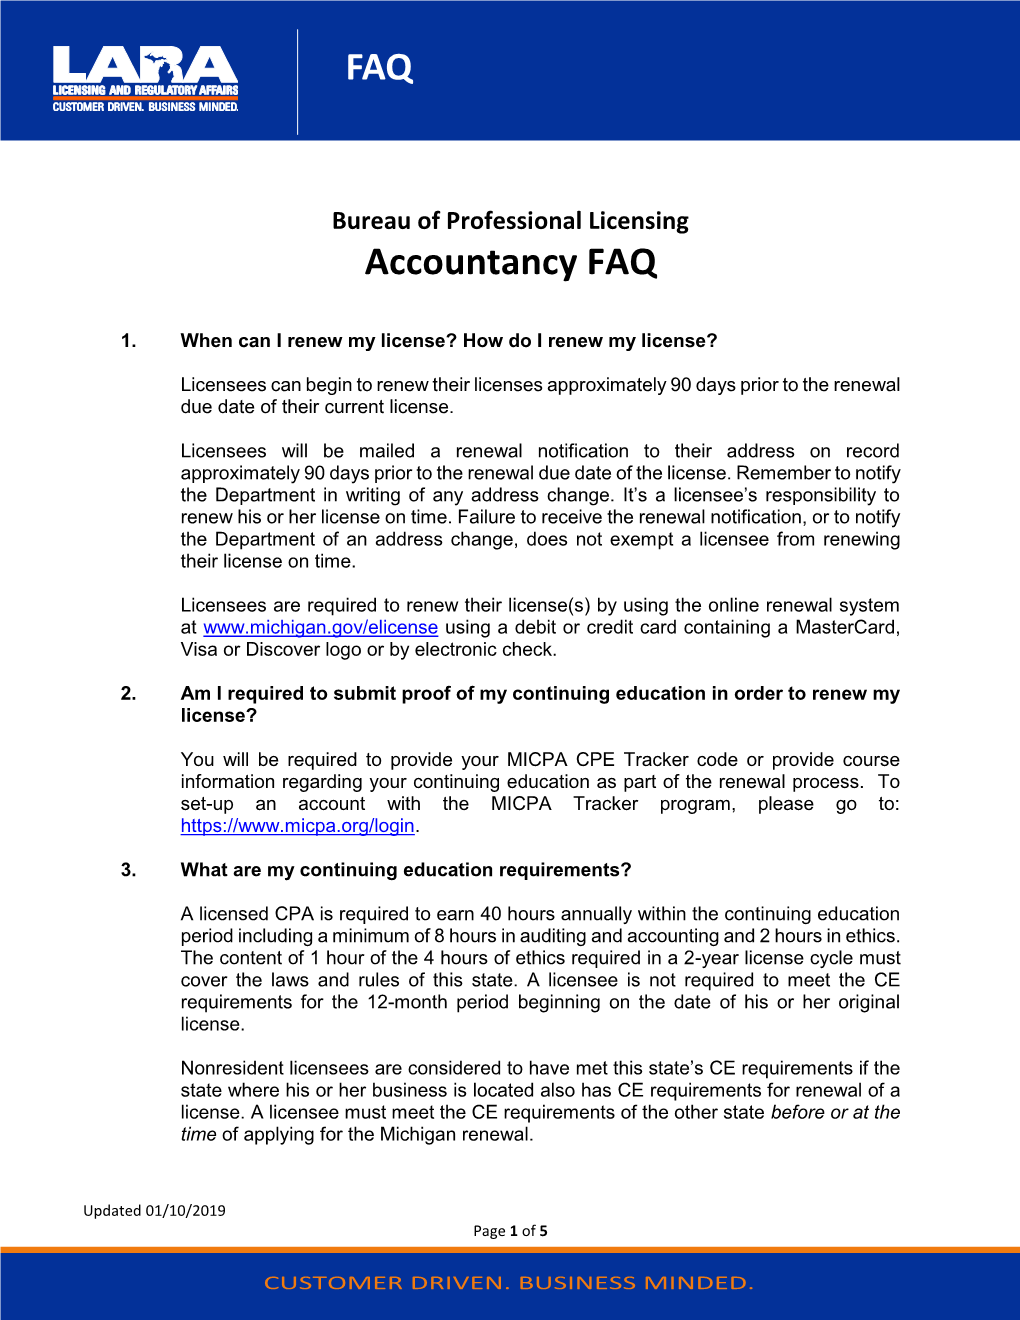 Bureau of Professional Licensing Accountancy FAQ